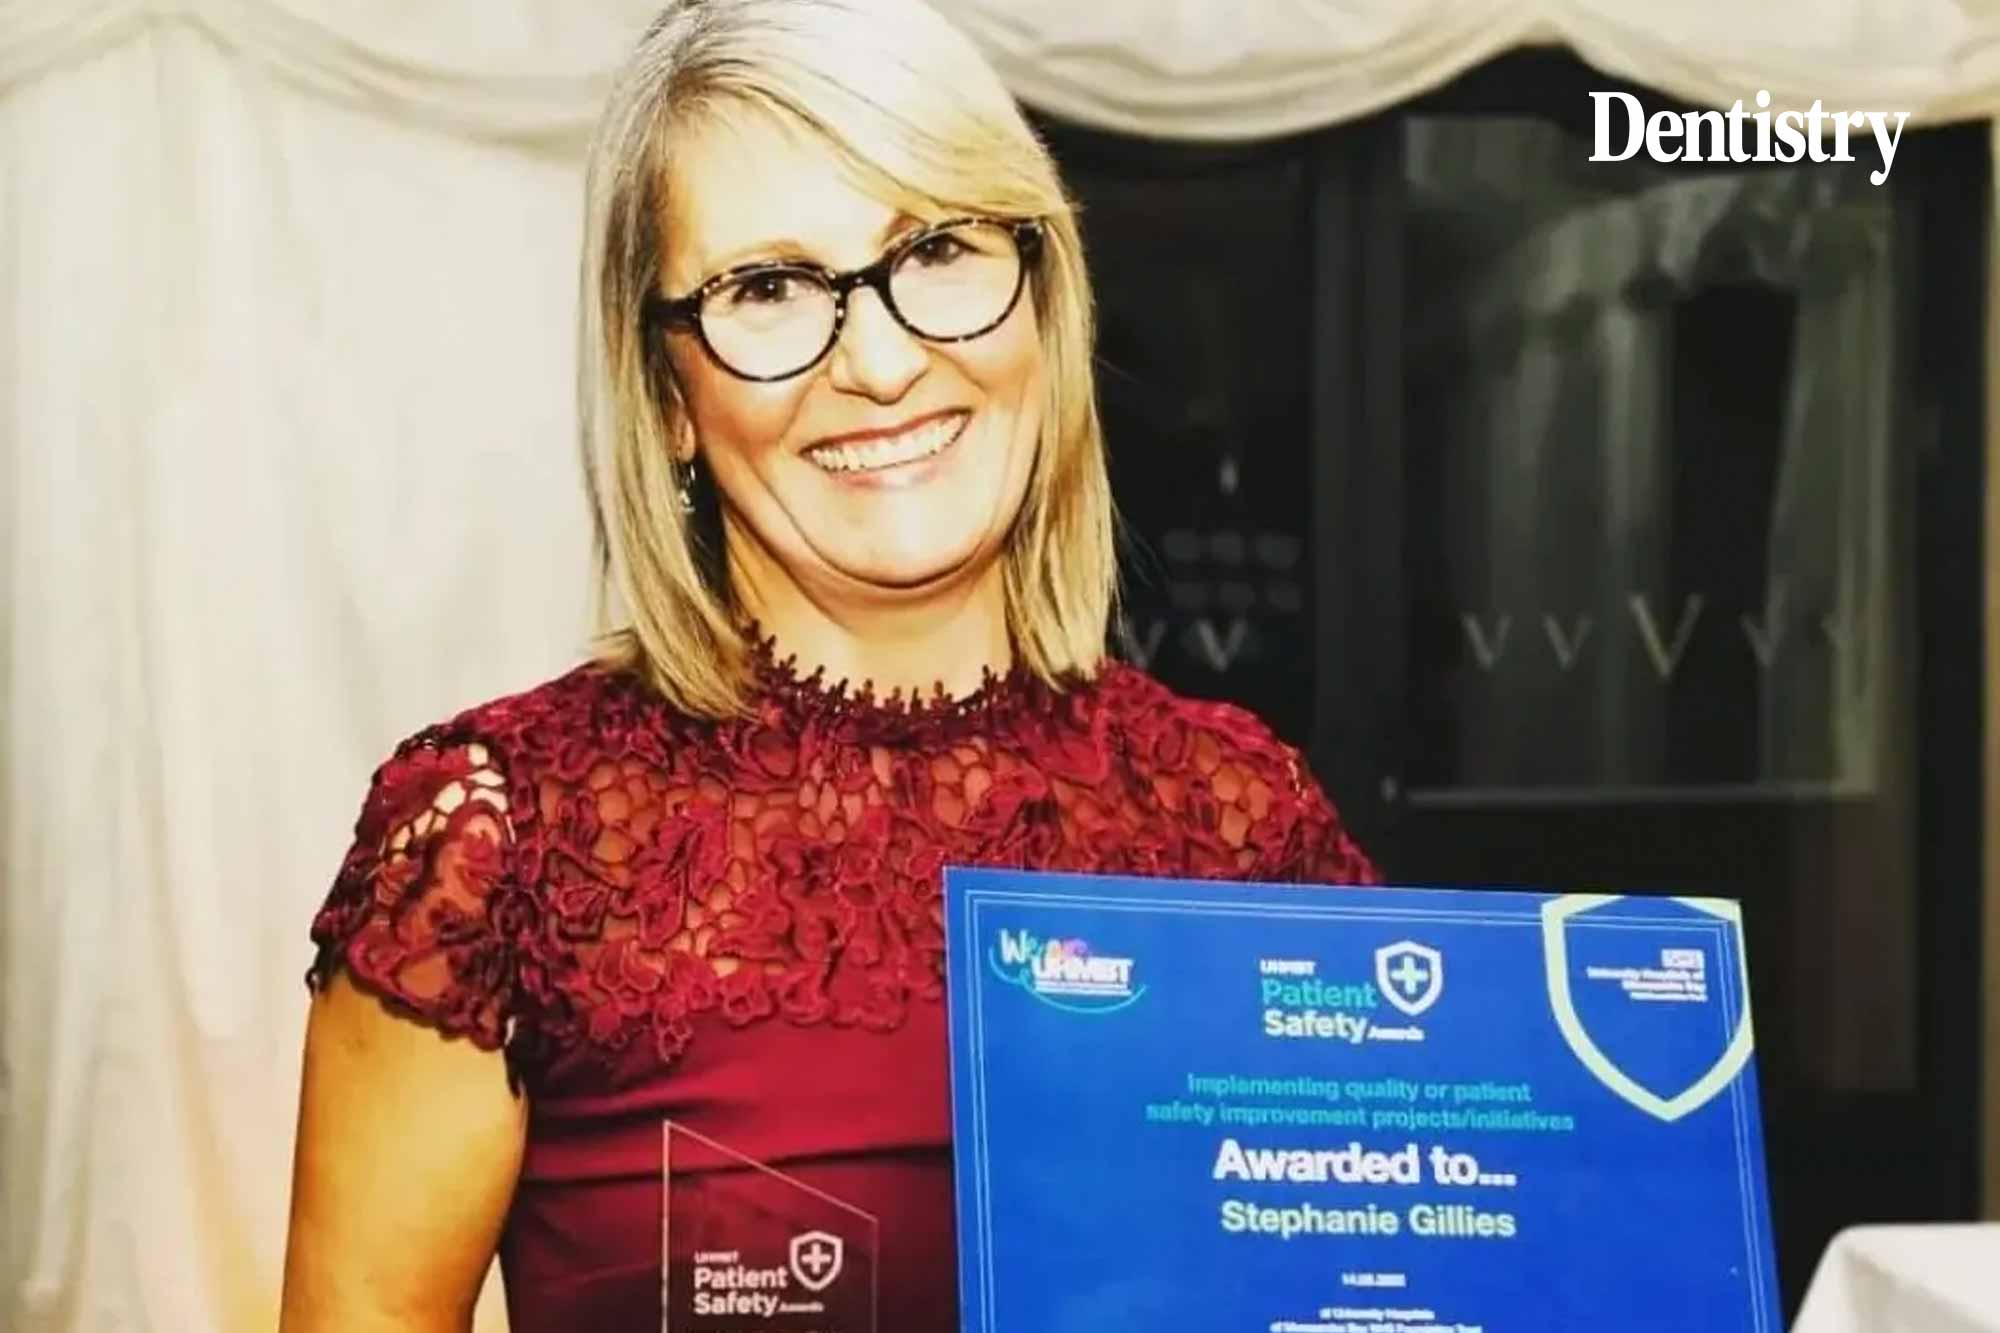 Pioneering dental nurse scoops award for innovative patient care